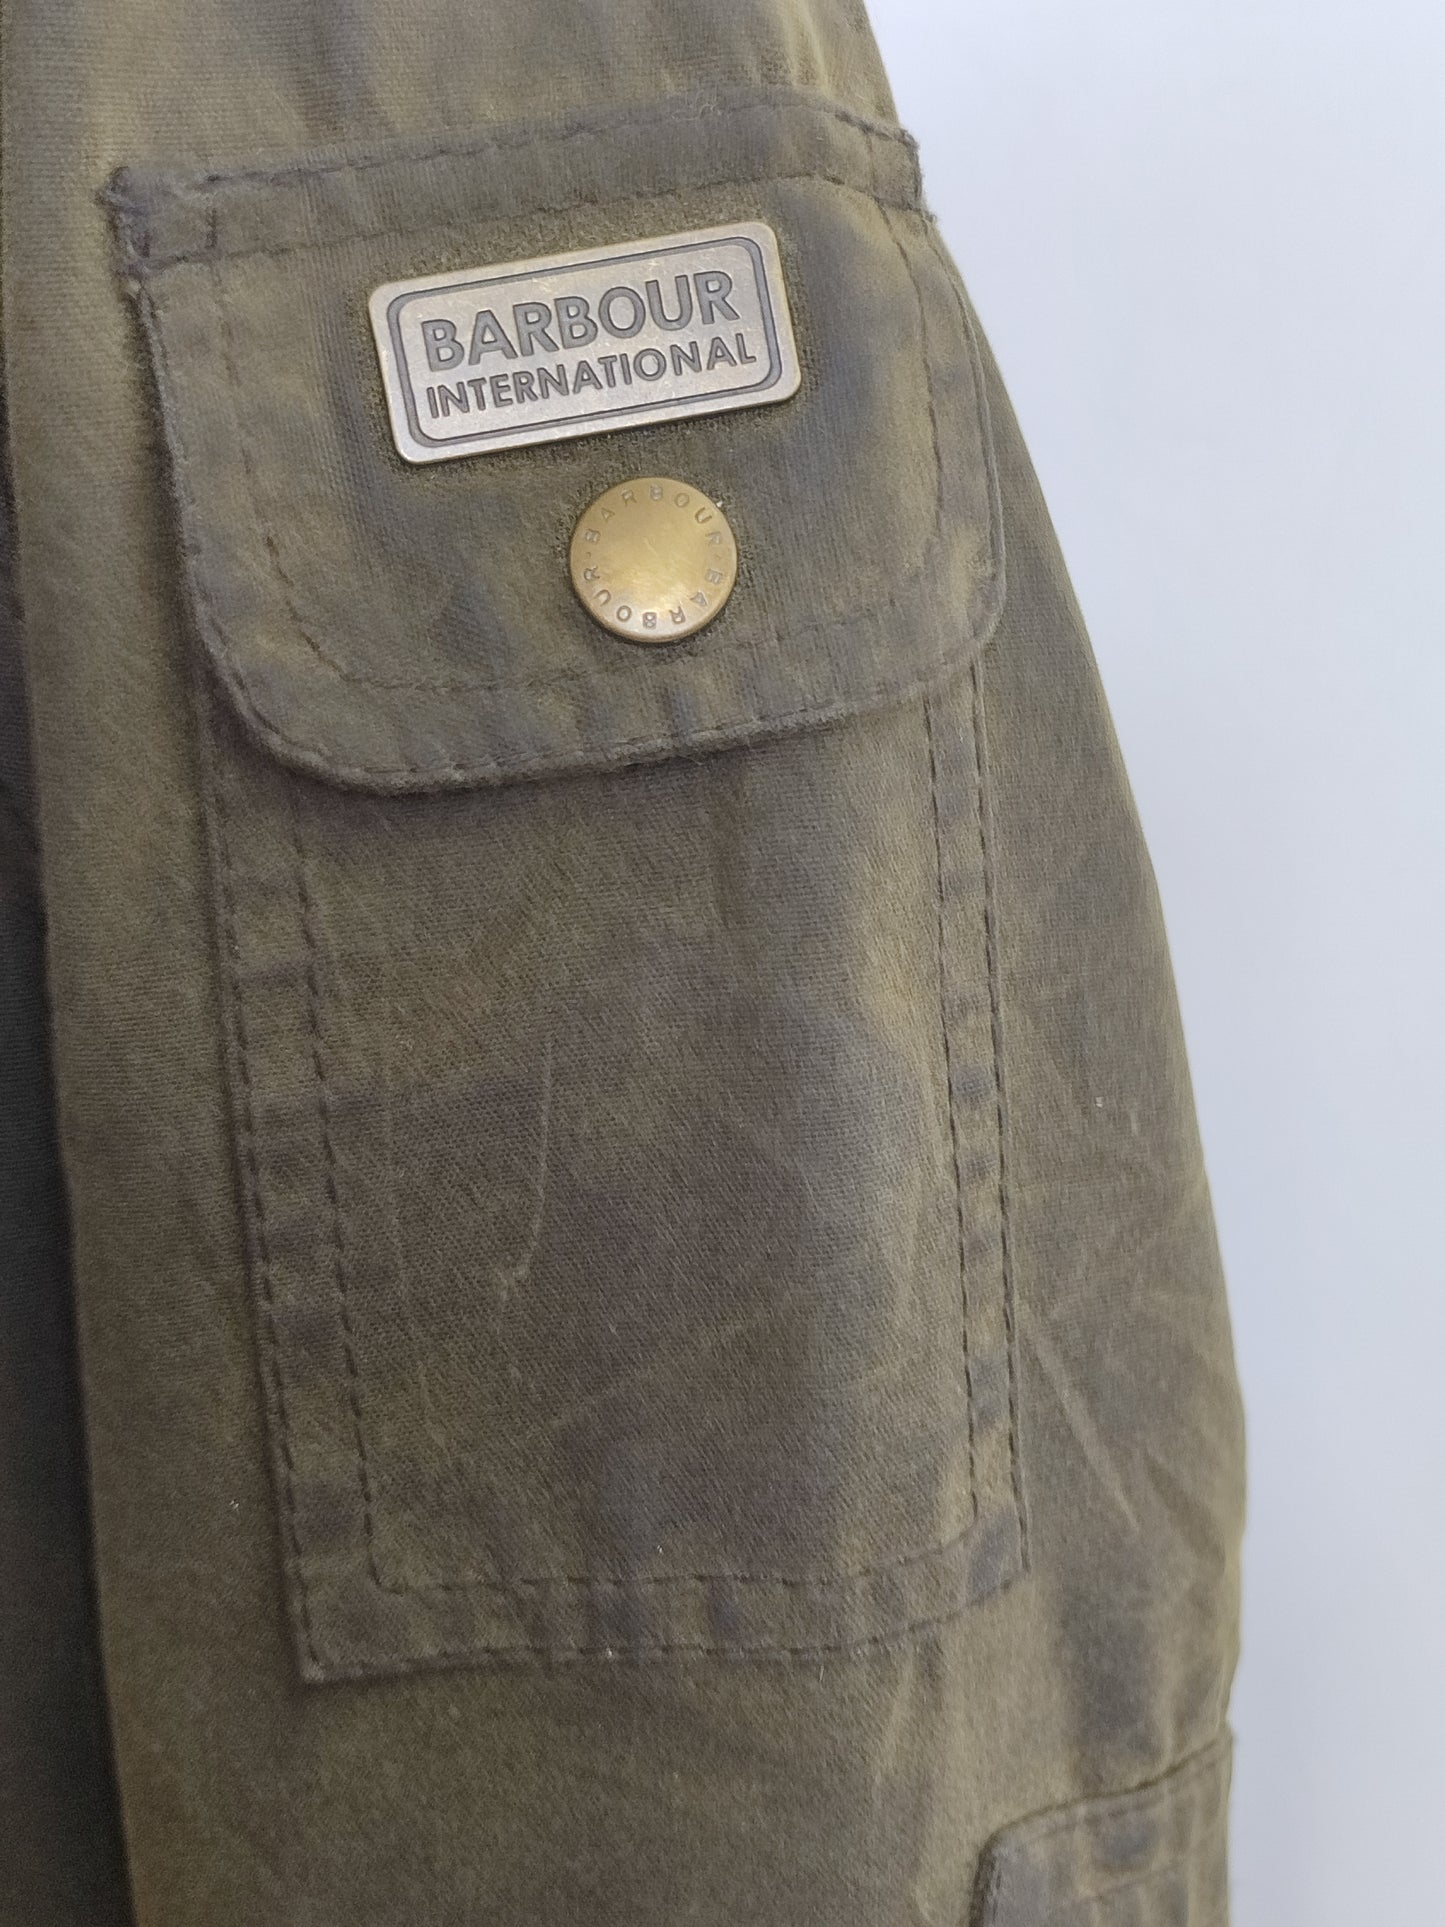 Giacca Barbour verde imbottito da donna UK12 Medium -Lady Green wax Camien coat size UK12